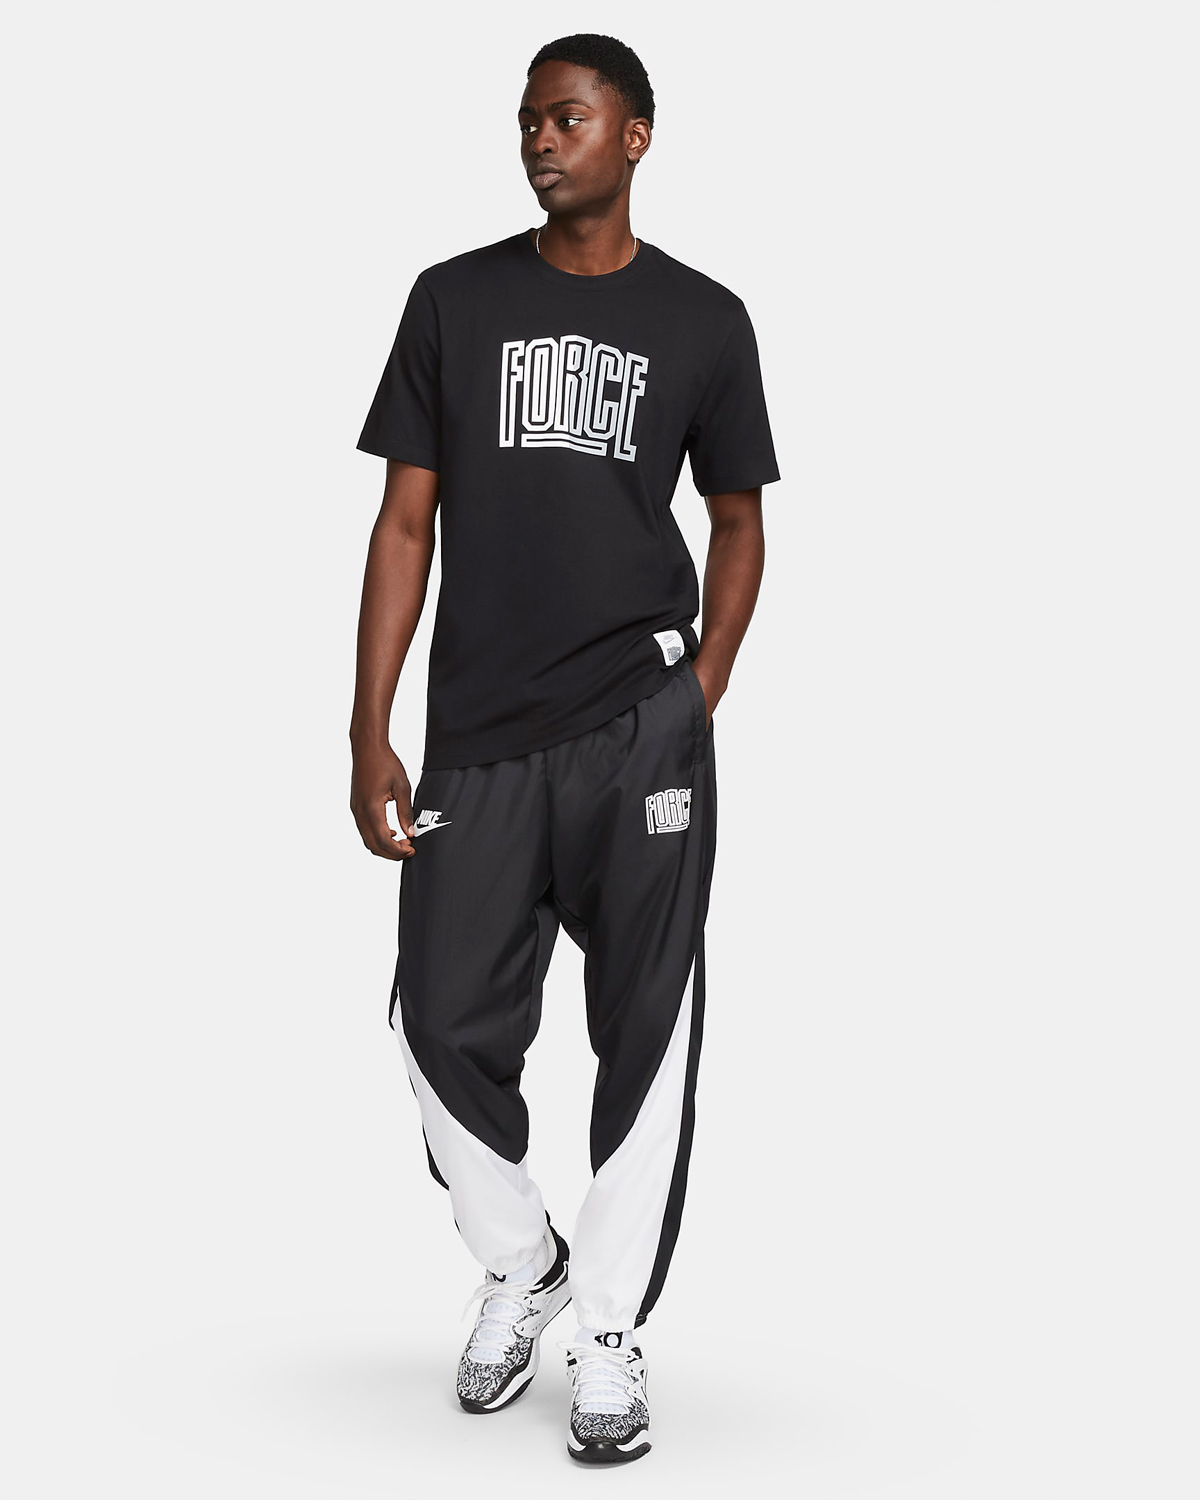 Nike-Starting-5-Basketball-Pants-Black-White-Outfit